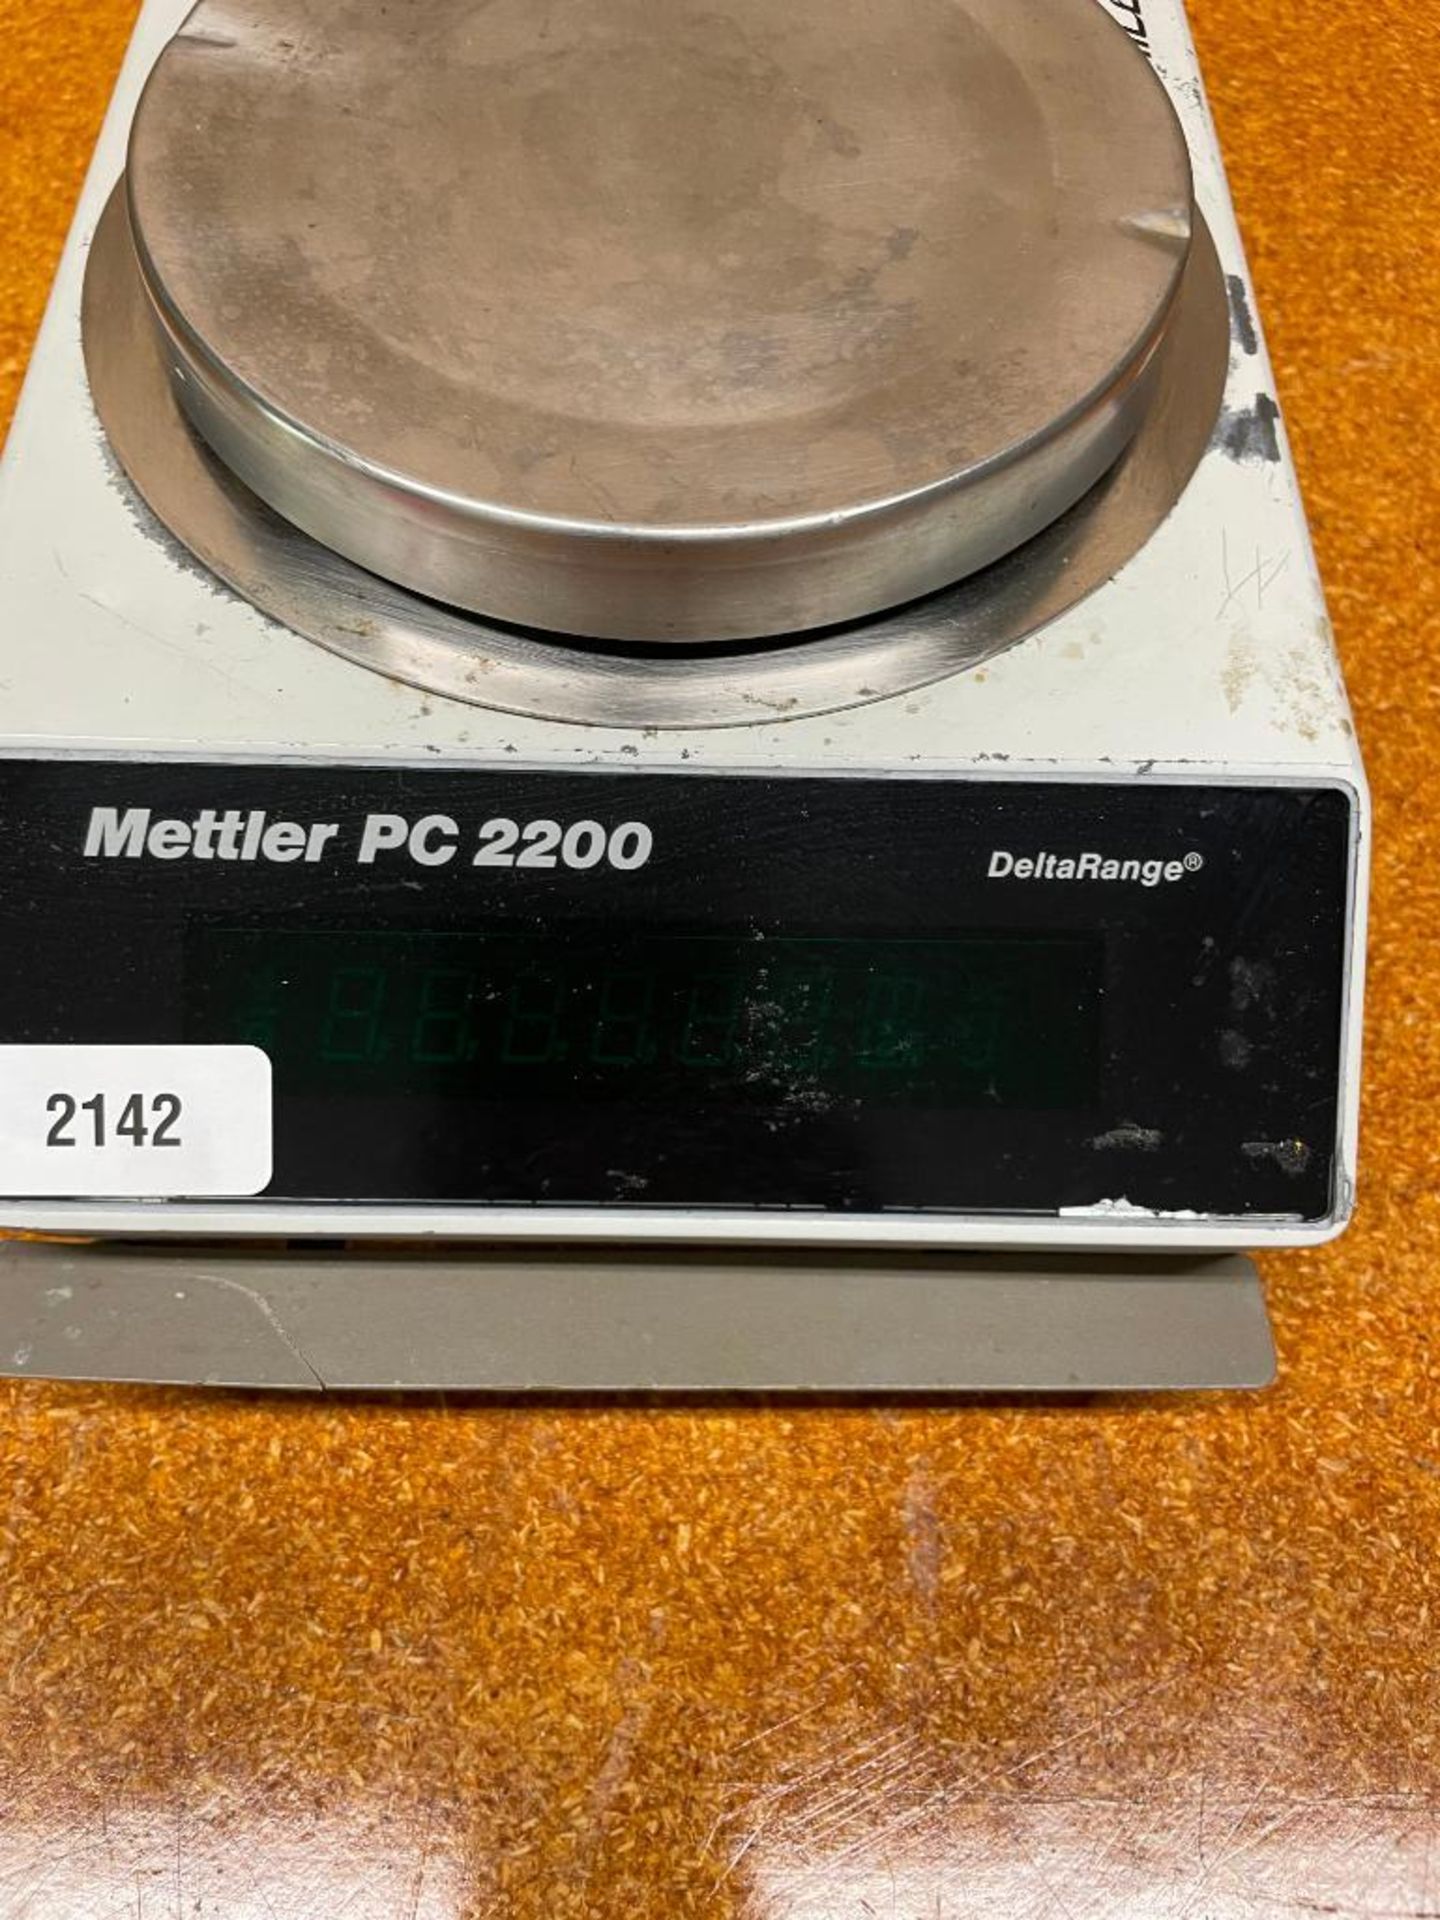 SCIENTIFIC ELECTRONIC BALANCE BRAND/MODEL: METTLER PC 2200 INFORMATION: DELTA RANGE QTY: 1 - Image 2 of 4